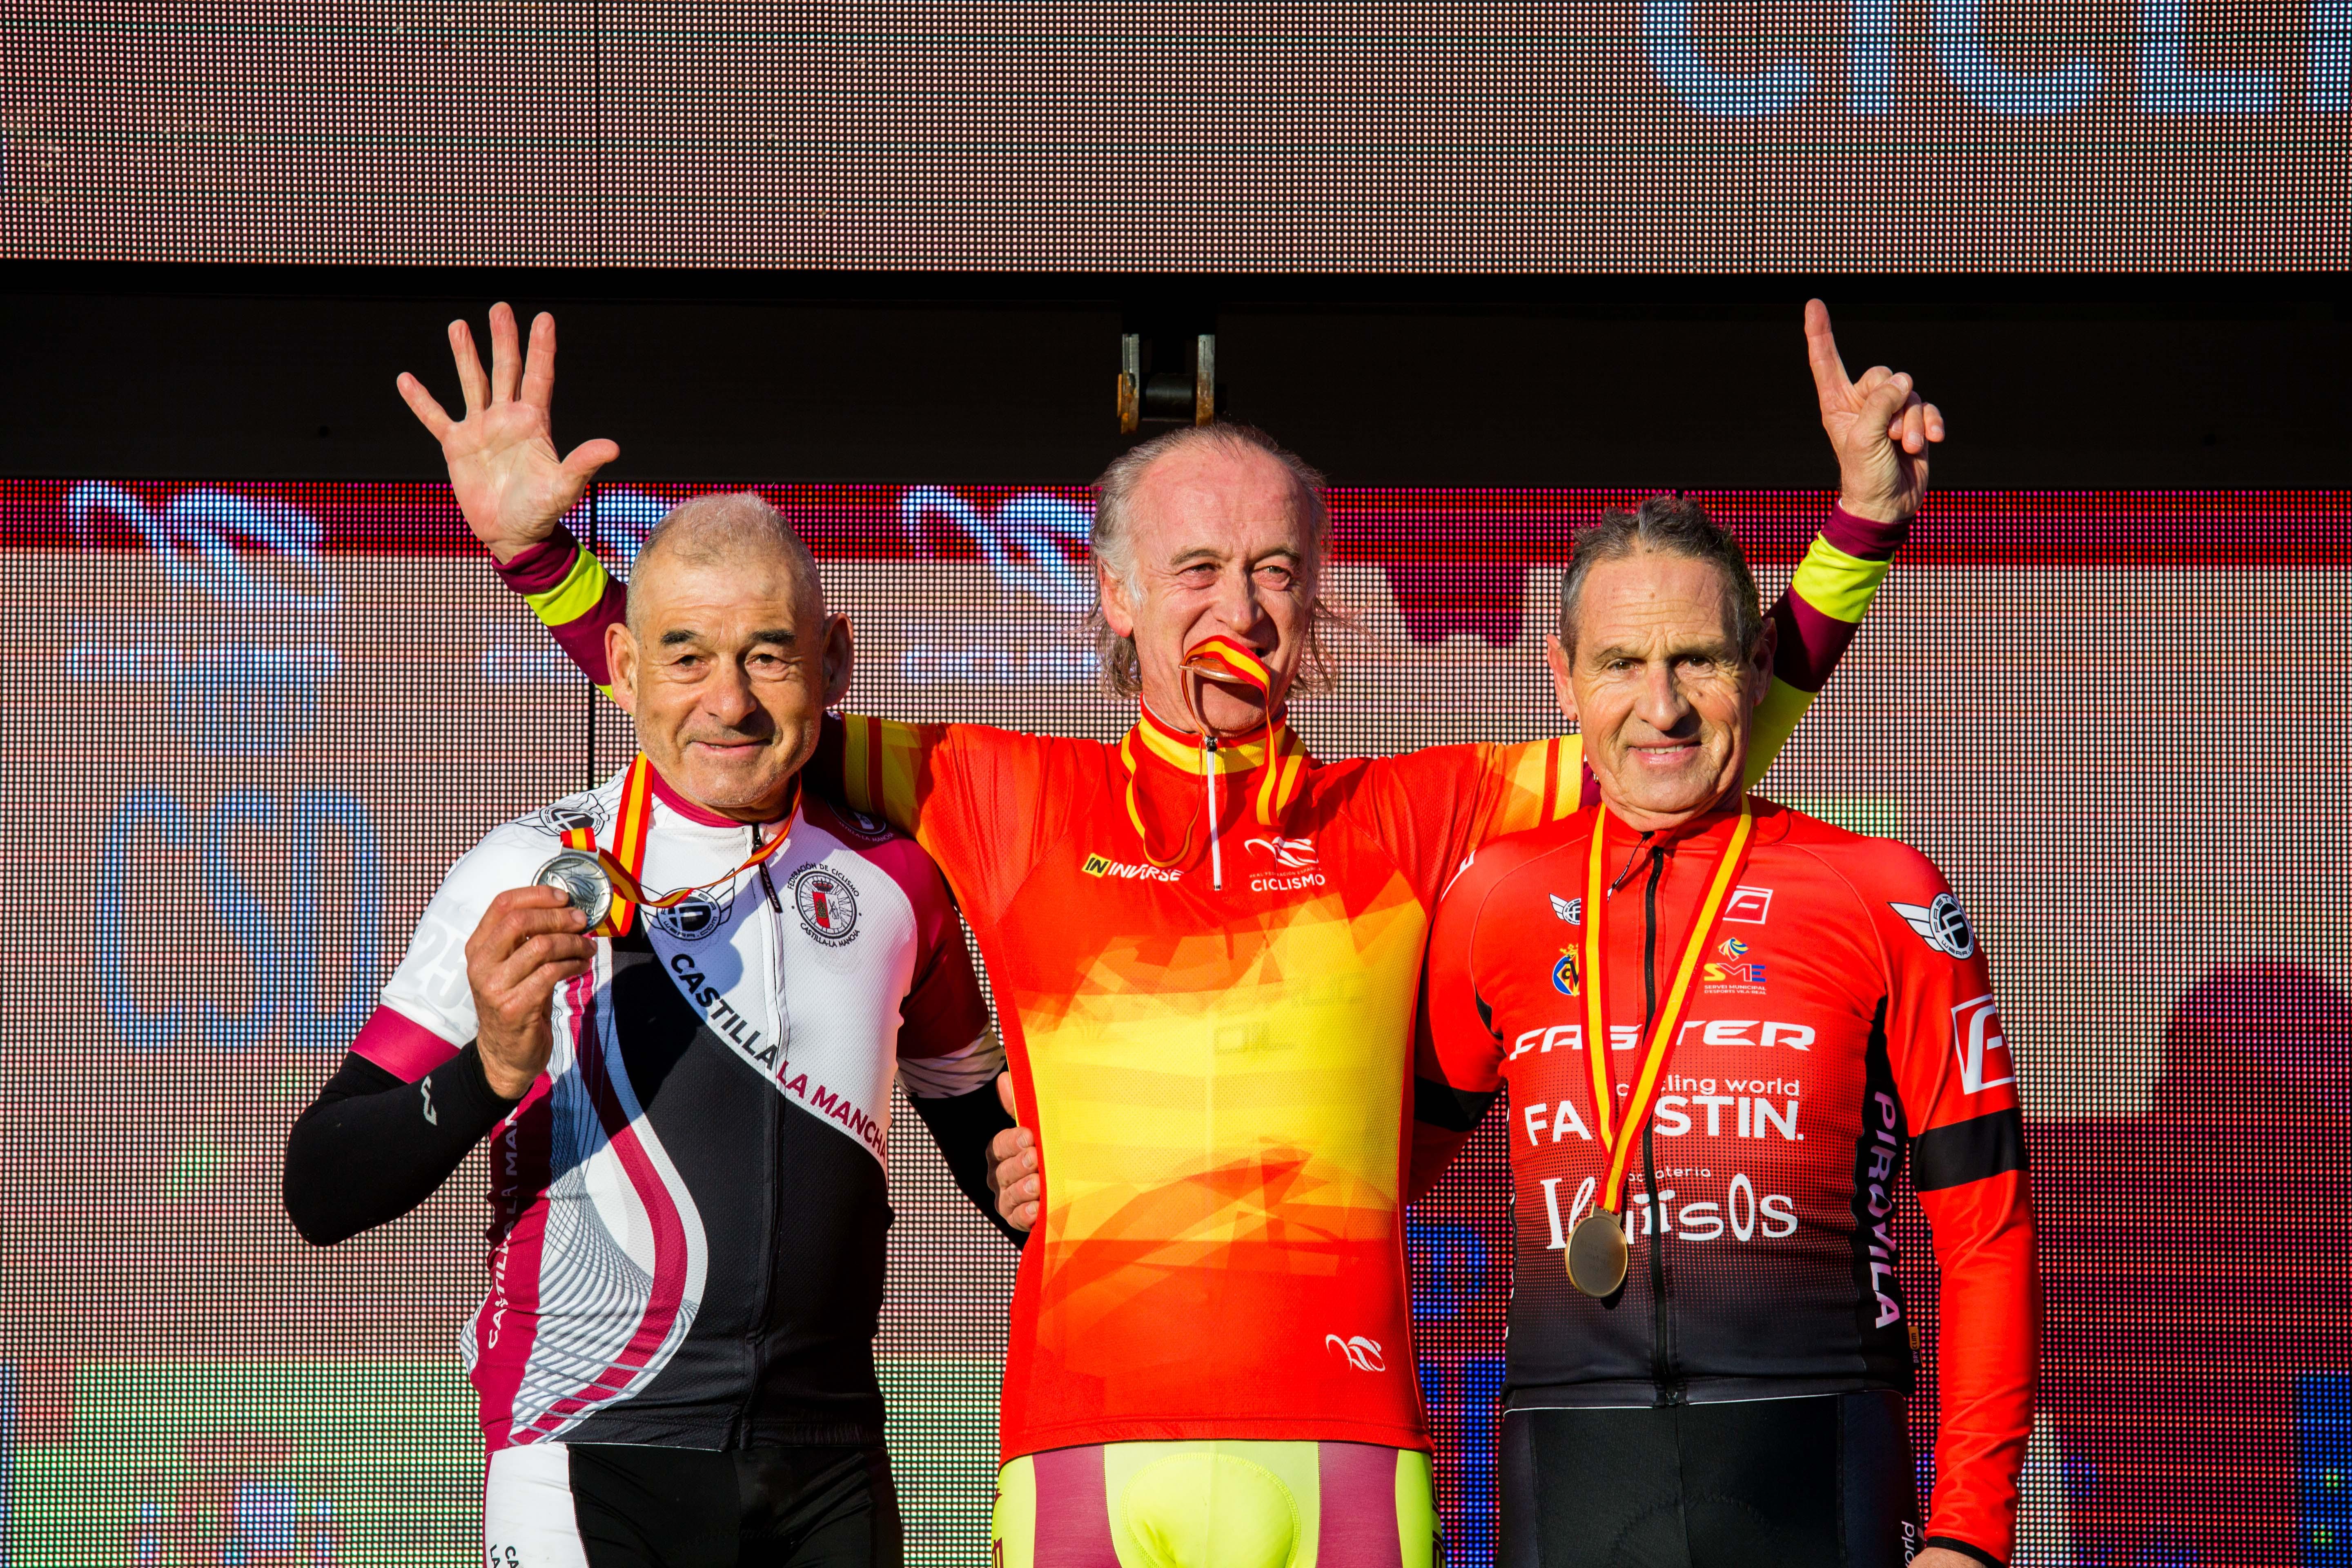 Igor Arrieta, nuevo Campeón de España Júnior de Ciclocross